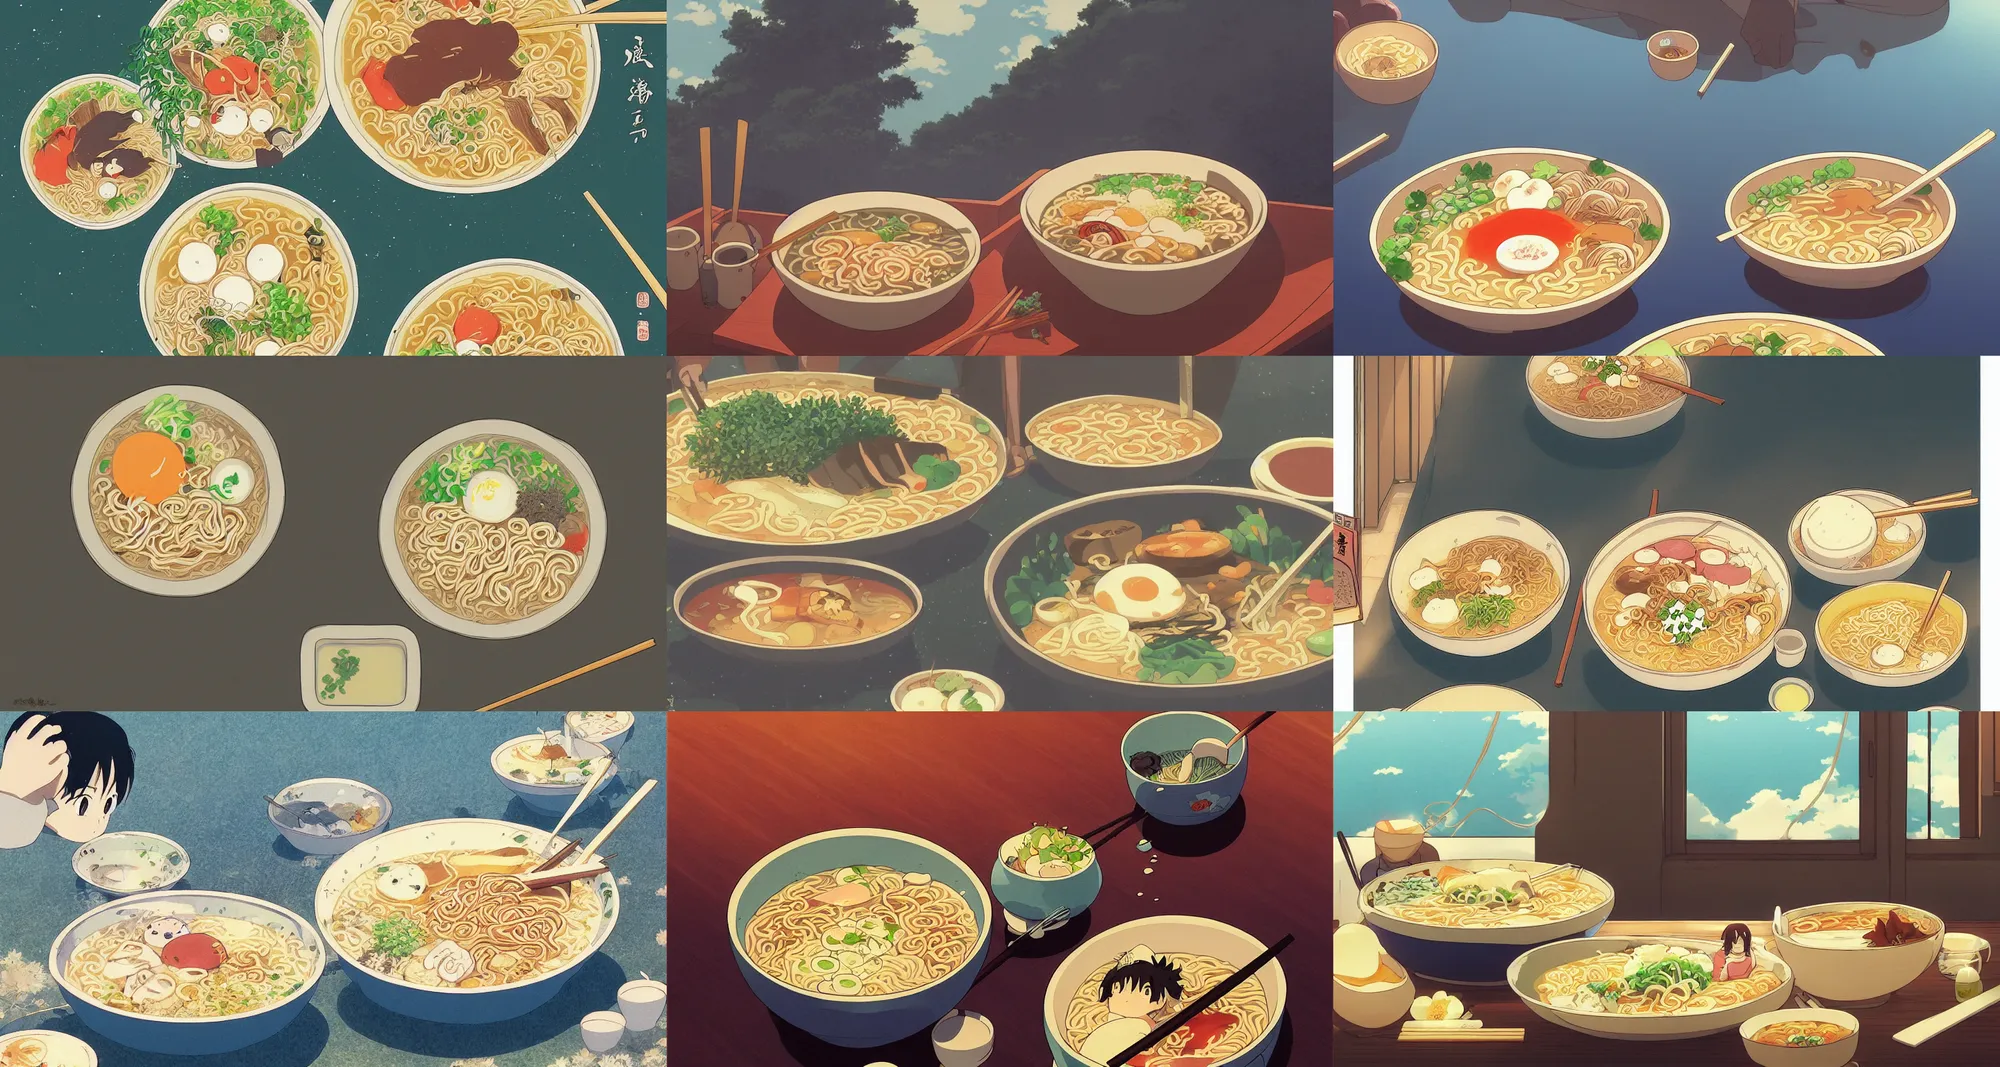 Prompt: beautiful anime illustration of bowl of ramen, relaxing, calm, cozy, peaceful, by mamoru hosoda, hayao miyazaki, makoto shinkai